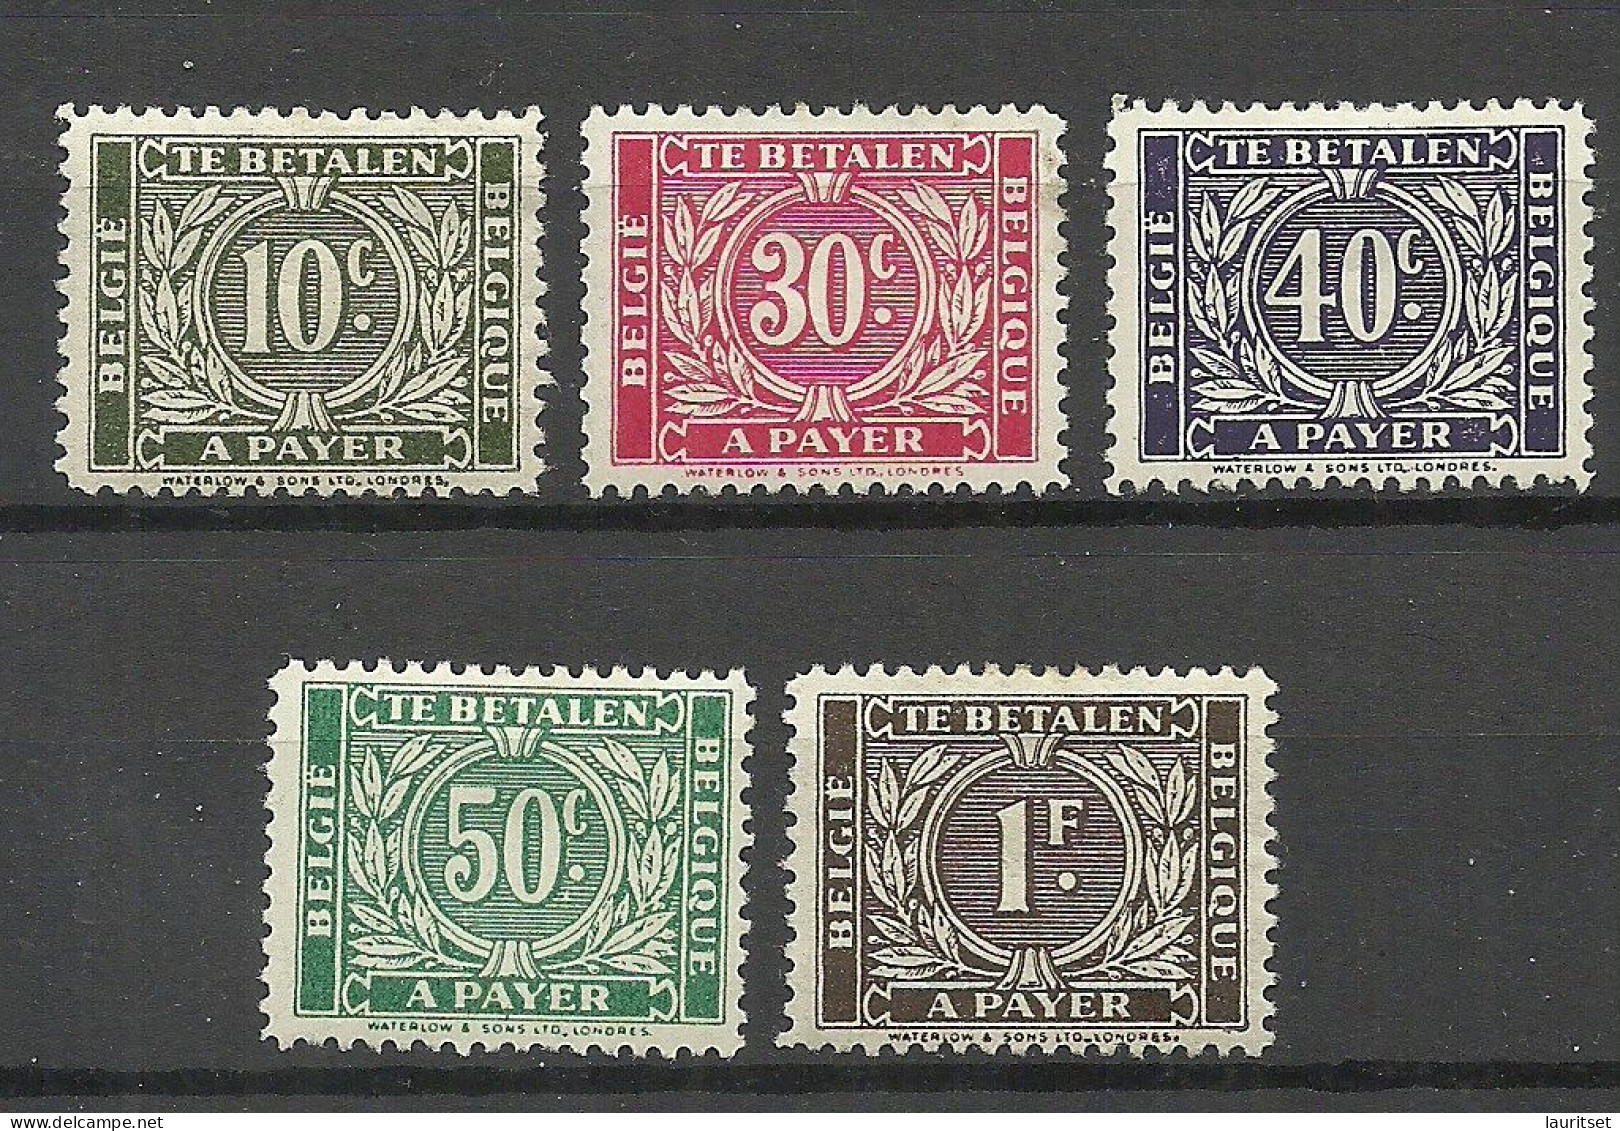 BELGIEN Belgium Belgique 1945 =5 Values From Set Michel 49 - 45 A Payer Te Betalen Portomarken Postage Due * - Stamps